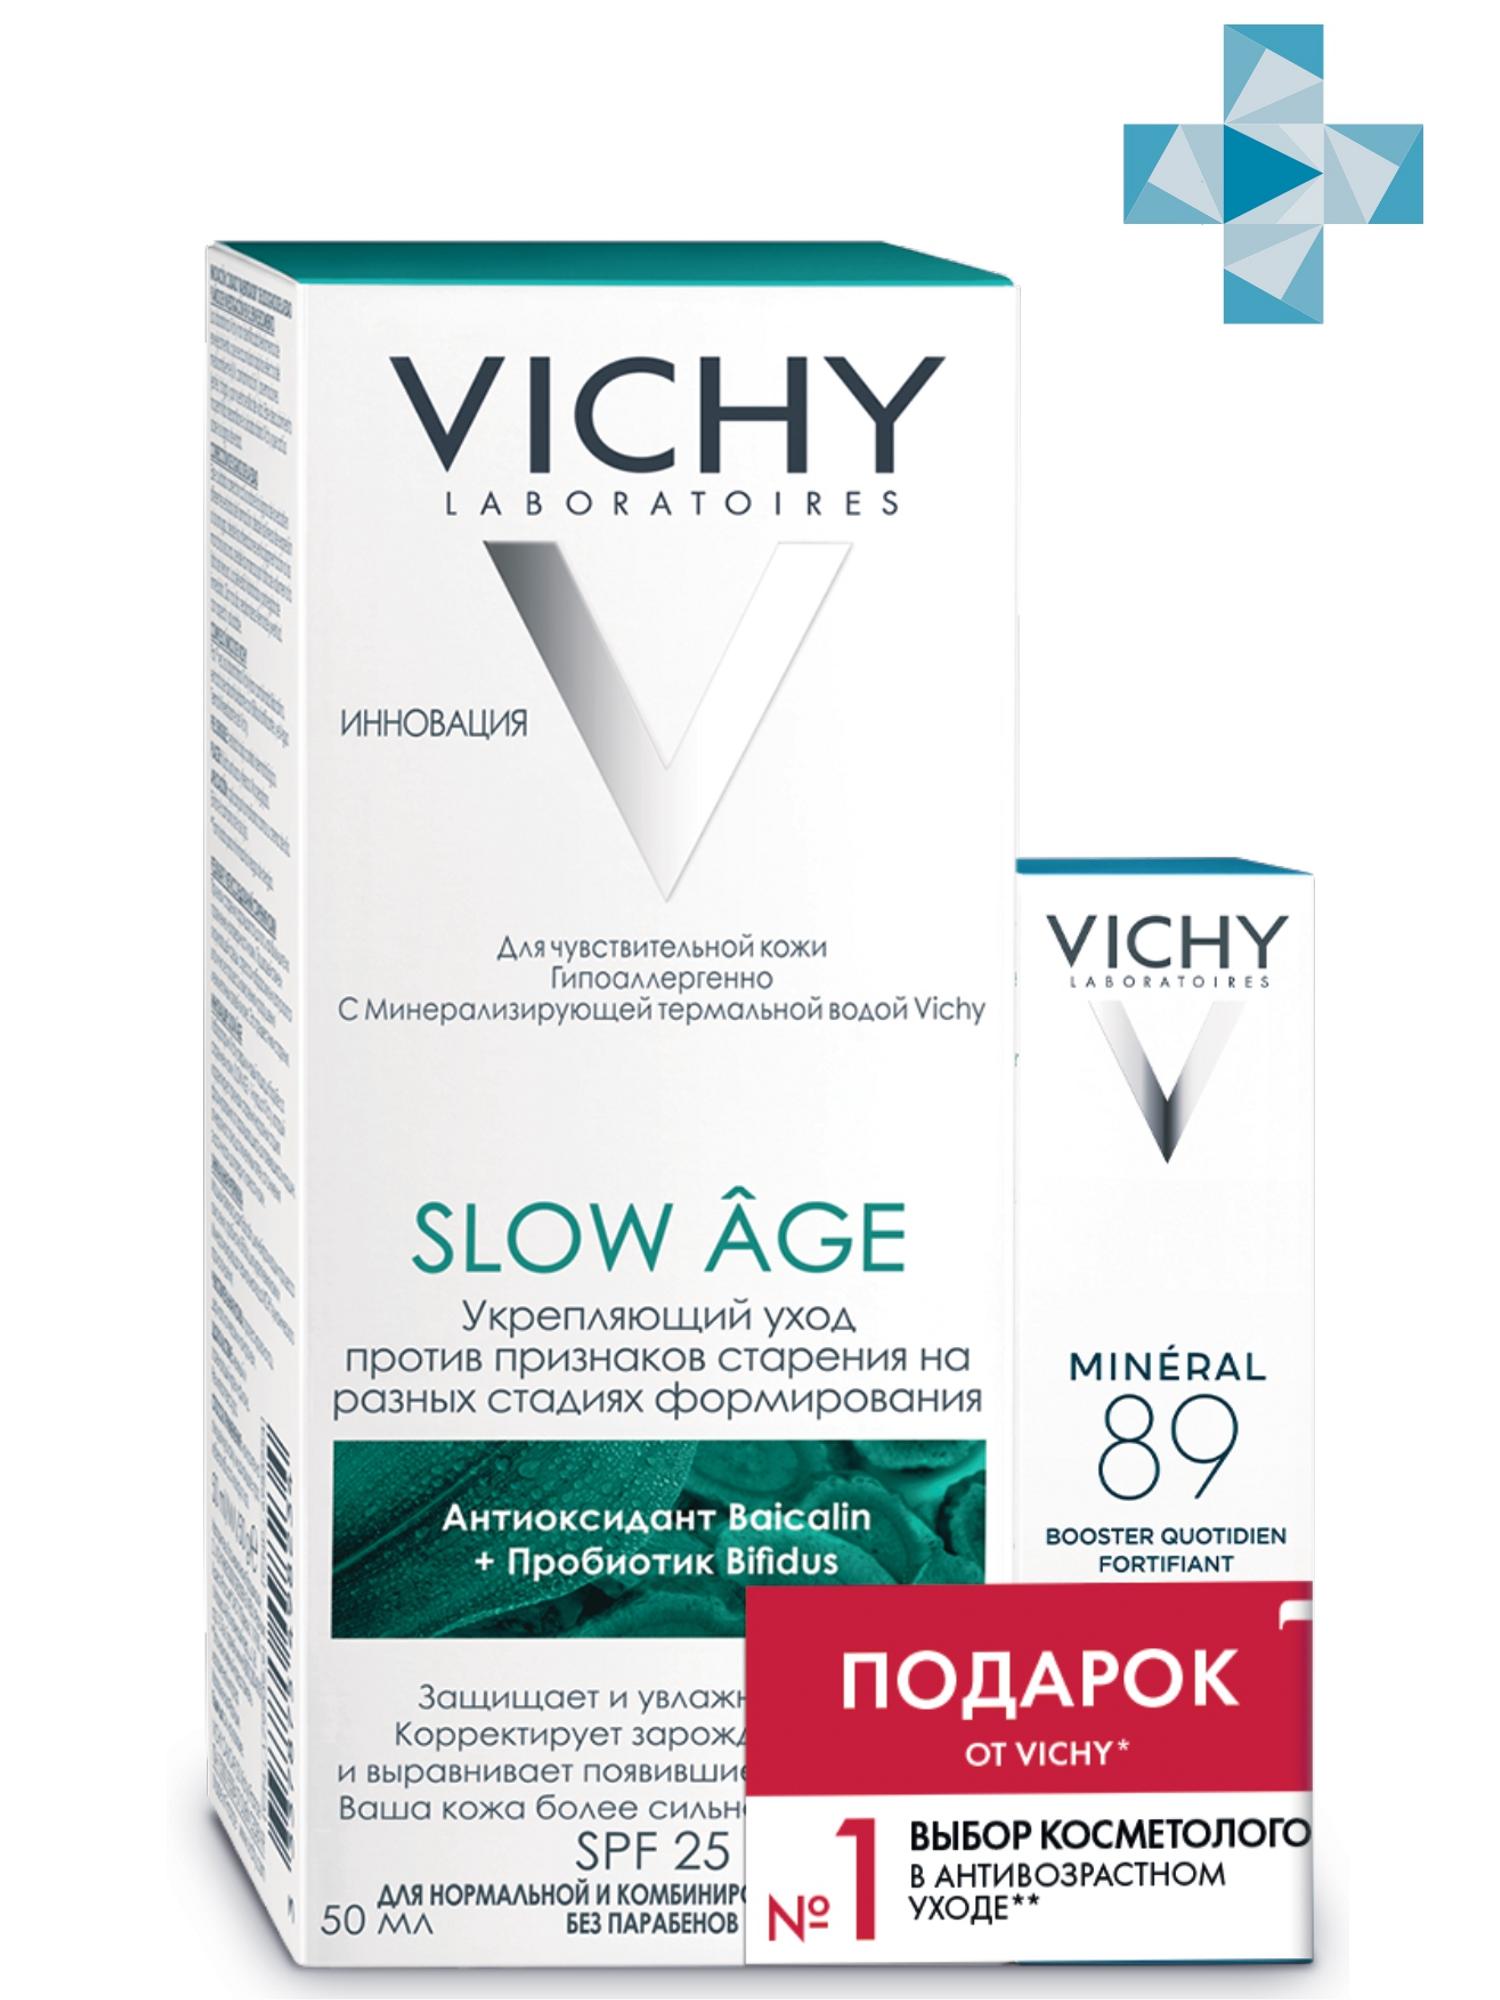 Vichy Набор Slow Age Флюид для всех типов кожи 50 мл + Ежедневный гель-сыворотка Mineral 89, 10 мл (Vichy, Slow Age)